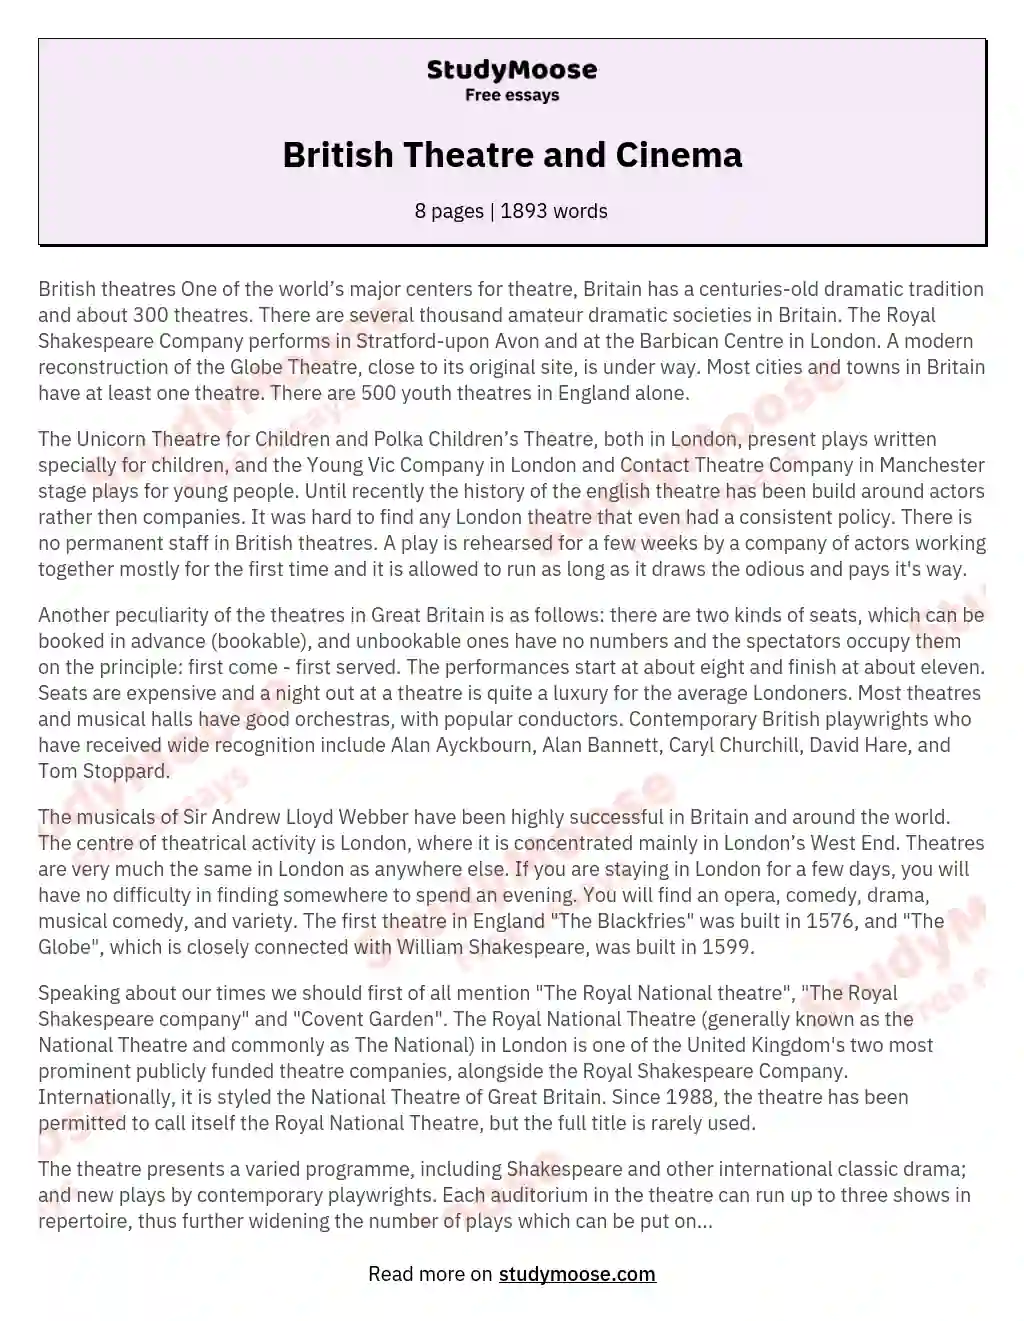 British Theatre and Cinema essay